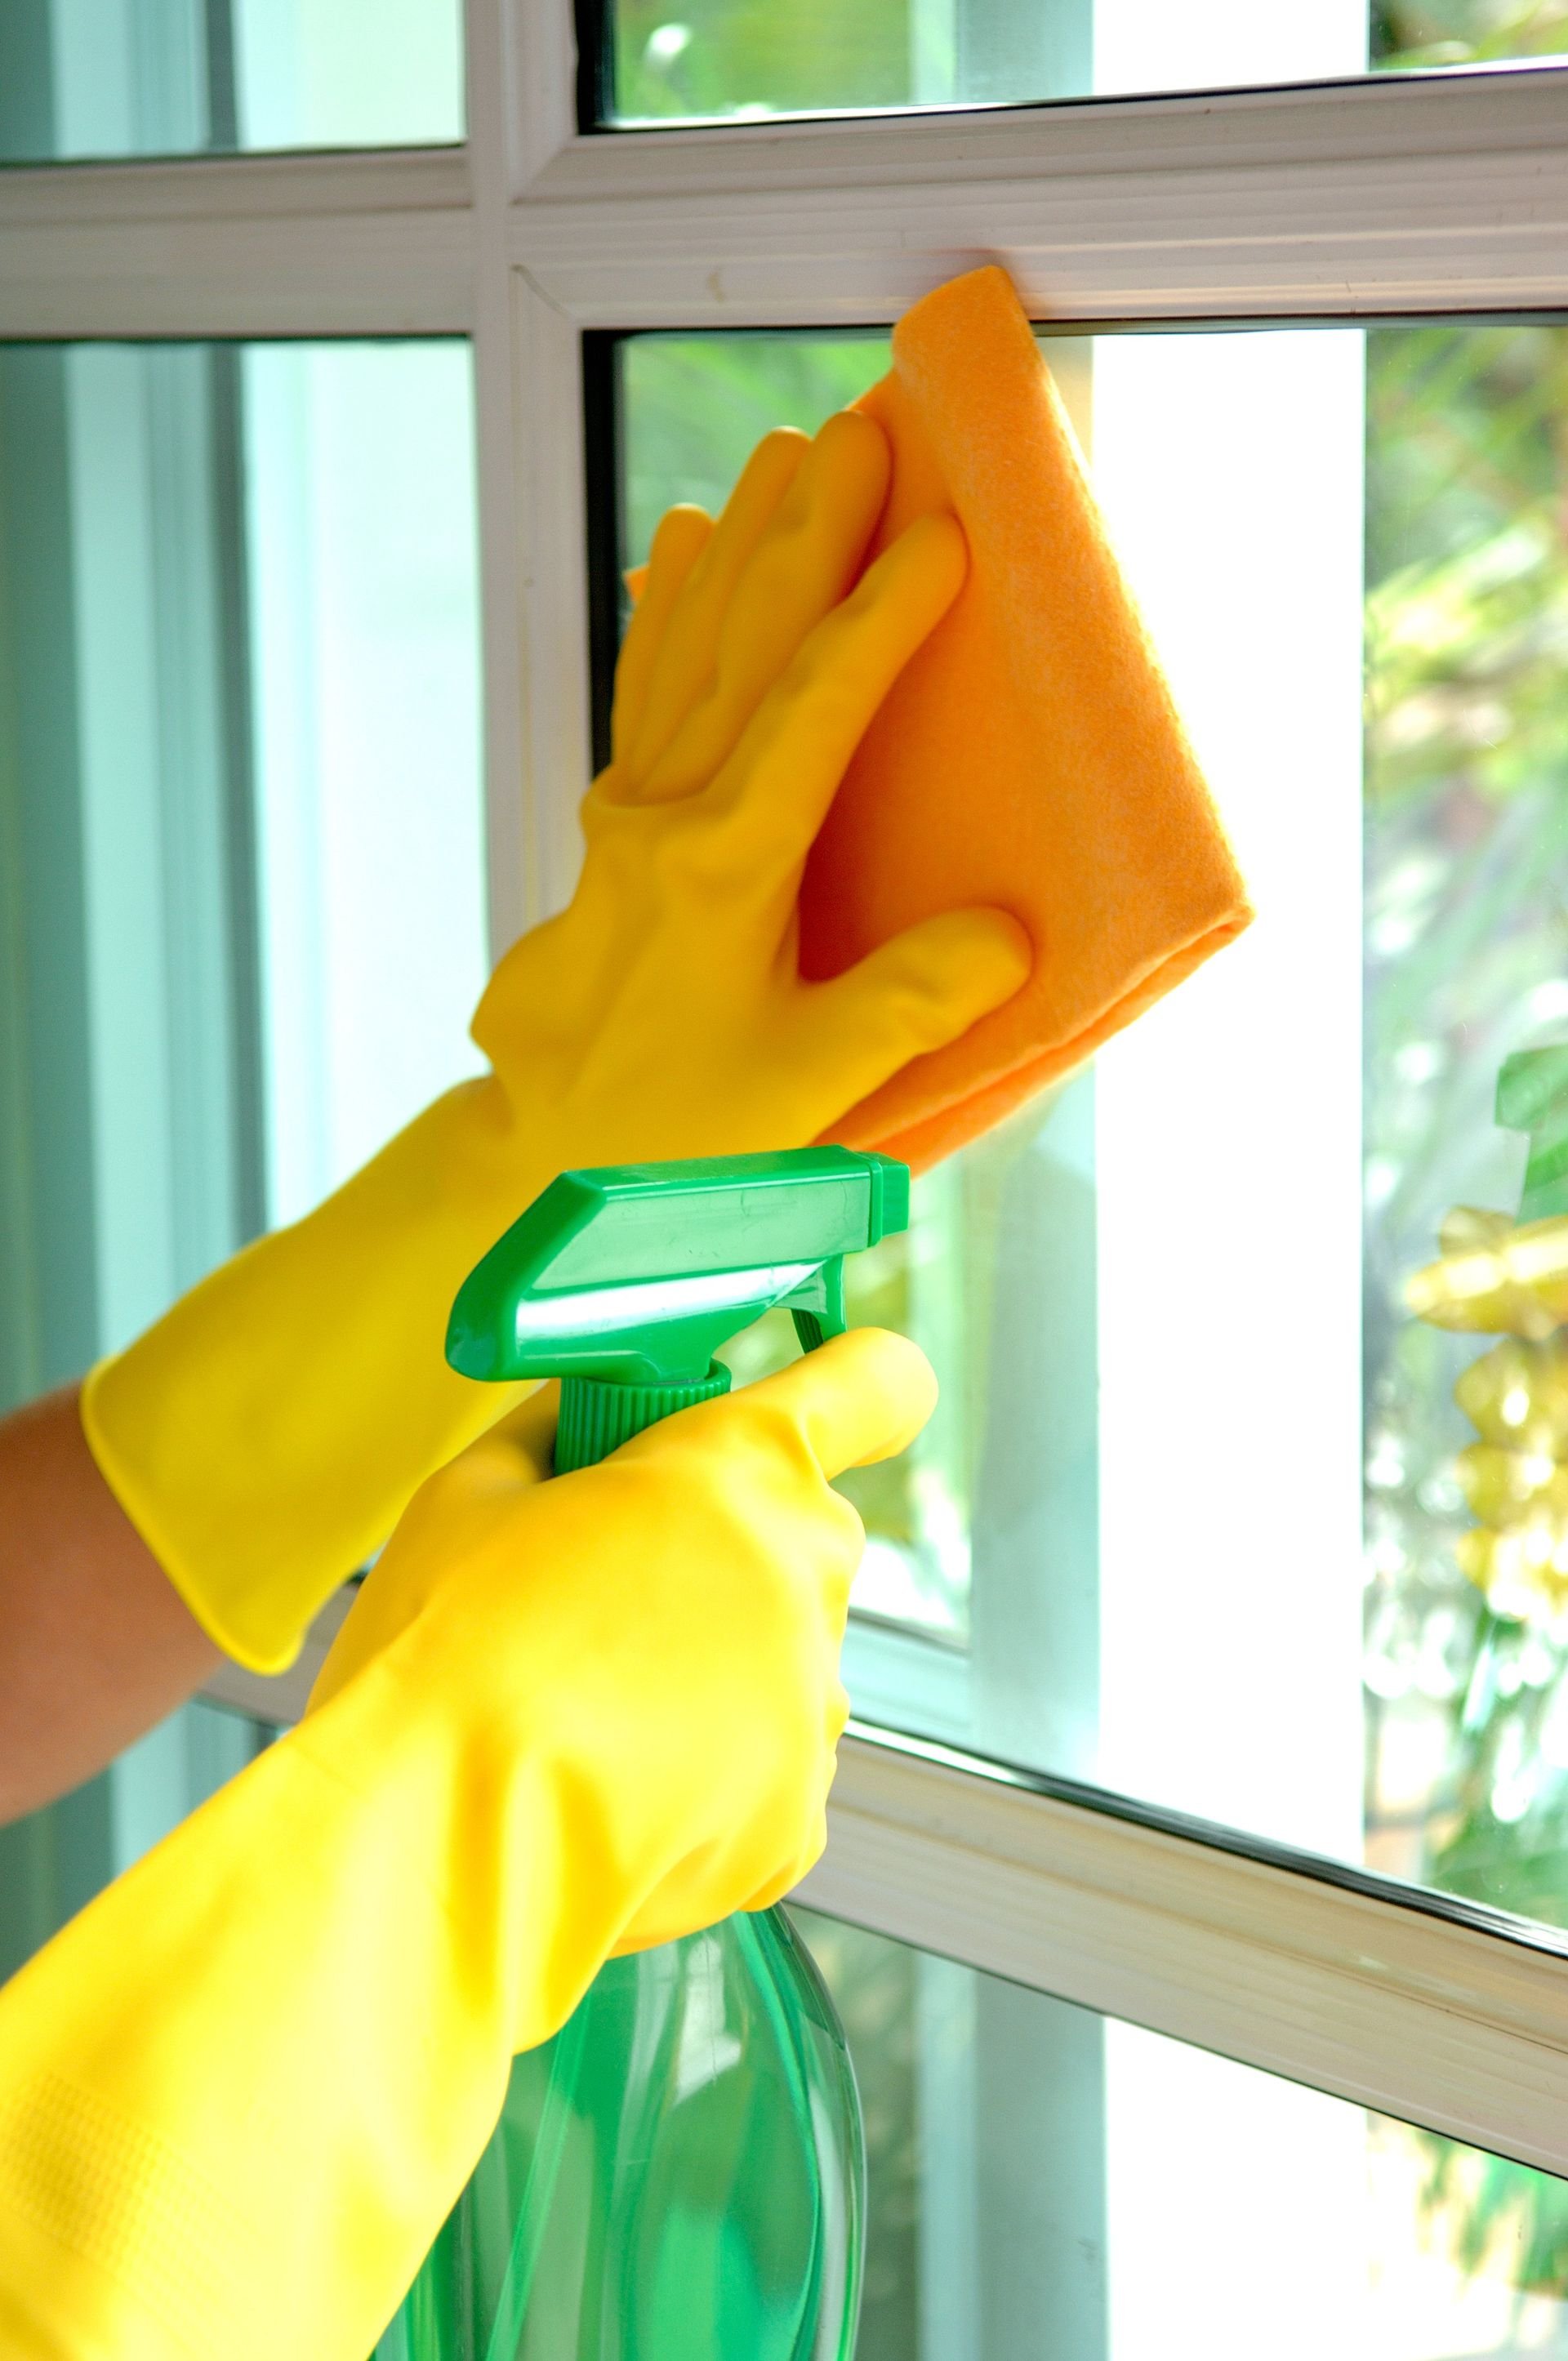 Мойка мытье окон. Мытье окон. Мойка окон. Чистые окна. Мойка окон клининг.